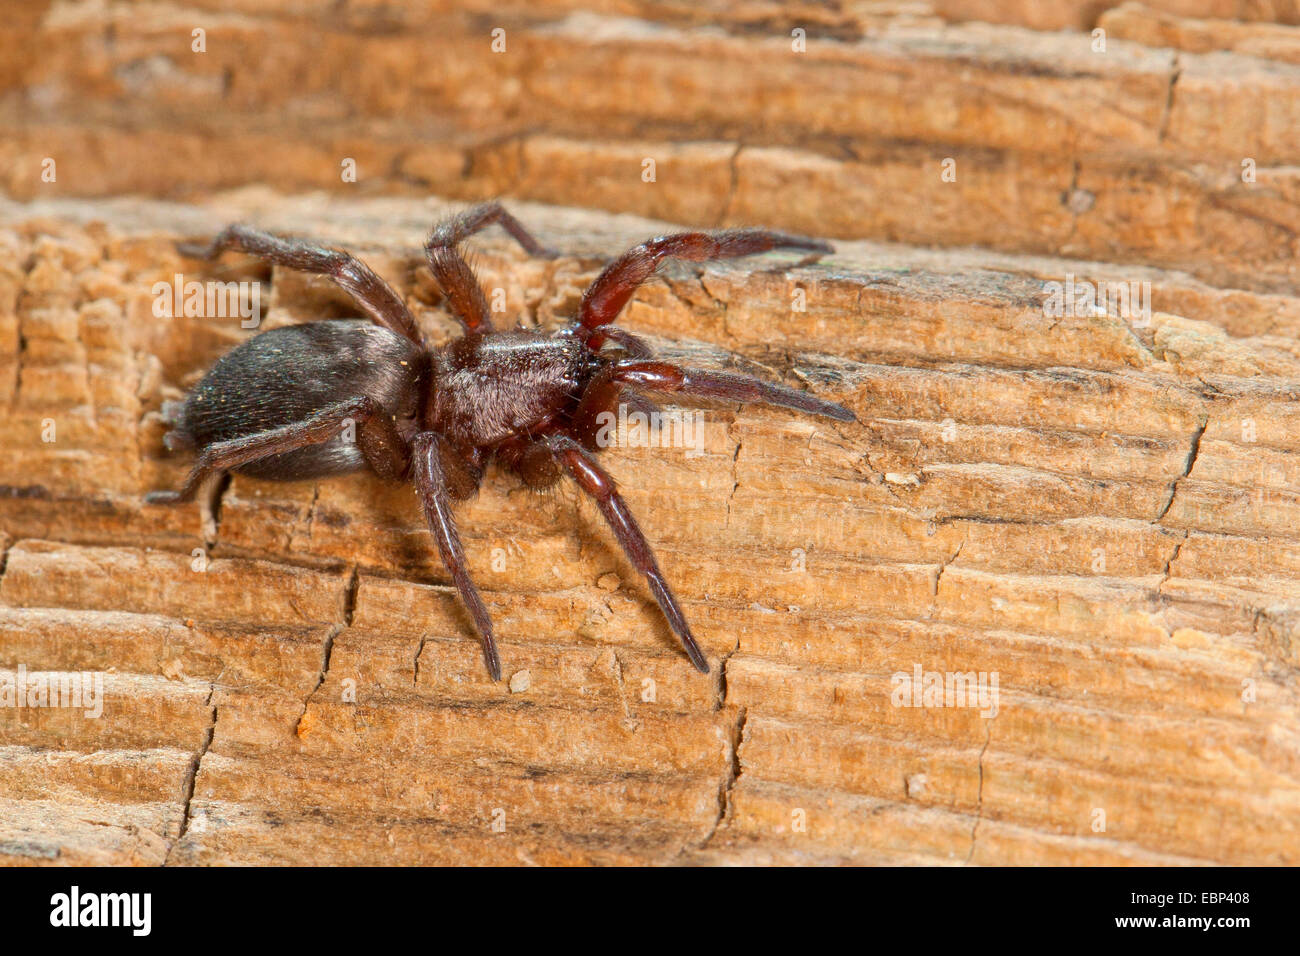 Mouse Spider, Ground spider (Scotophaeus scutulatus oder Scotophaeus blackwalli), on wood, Germany Stock Photo